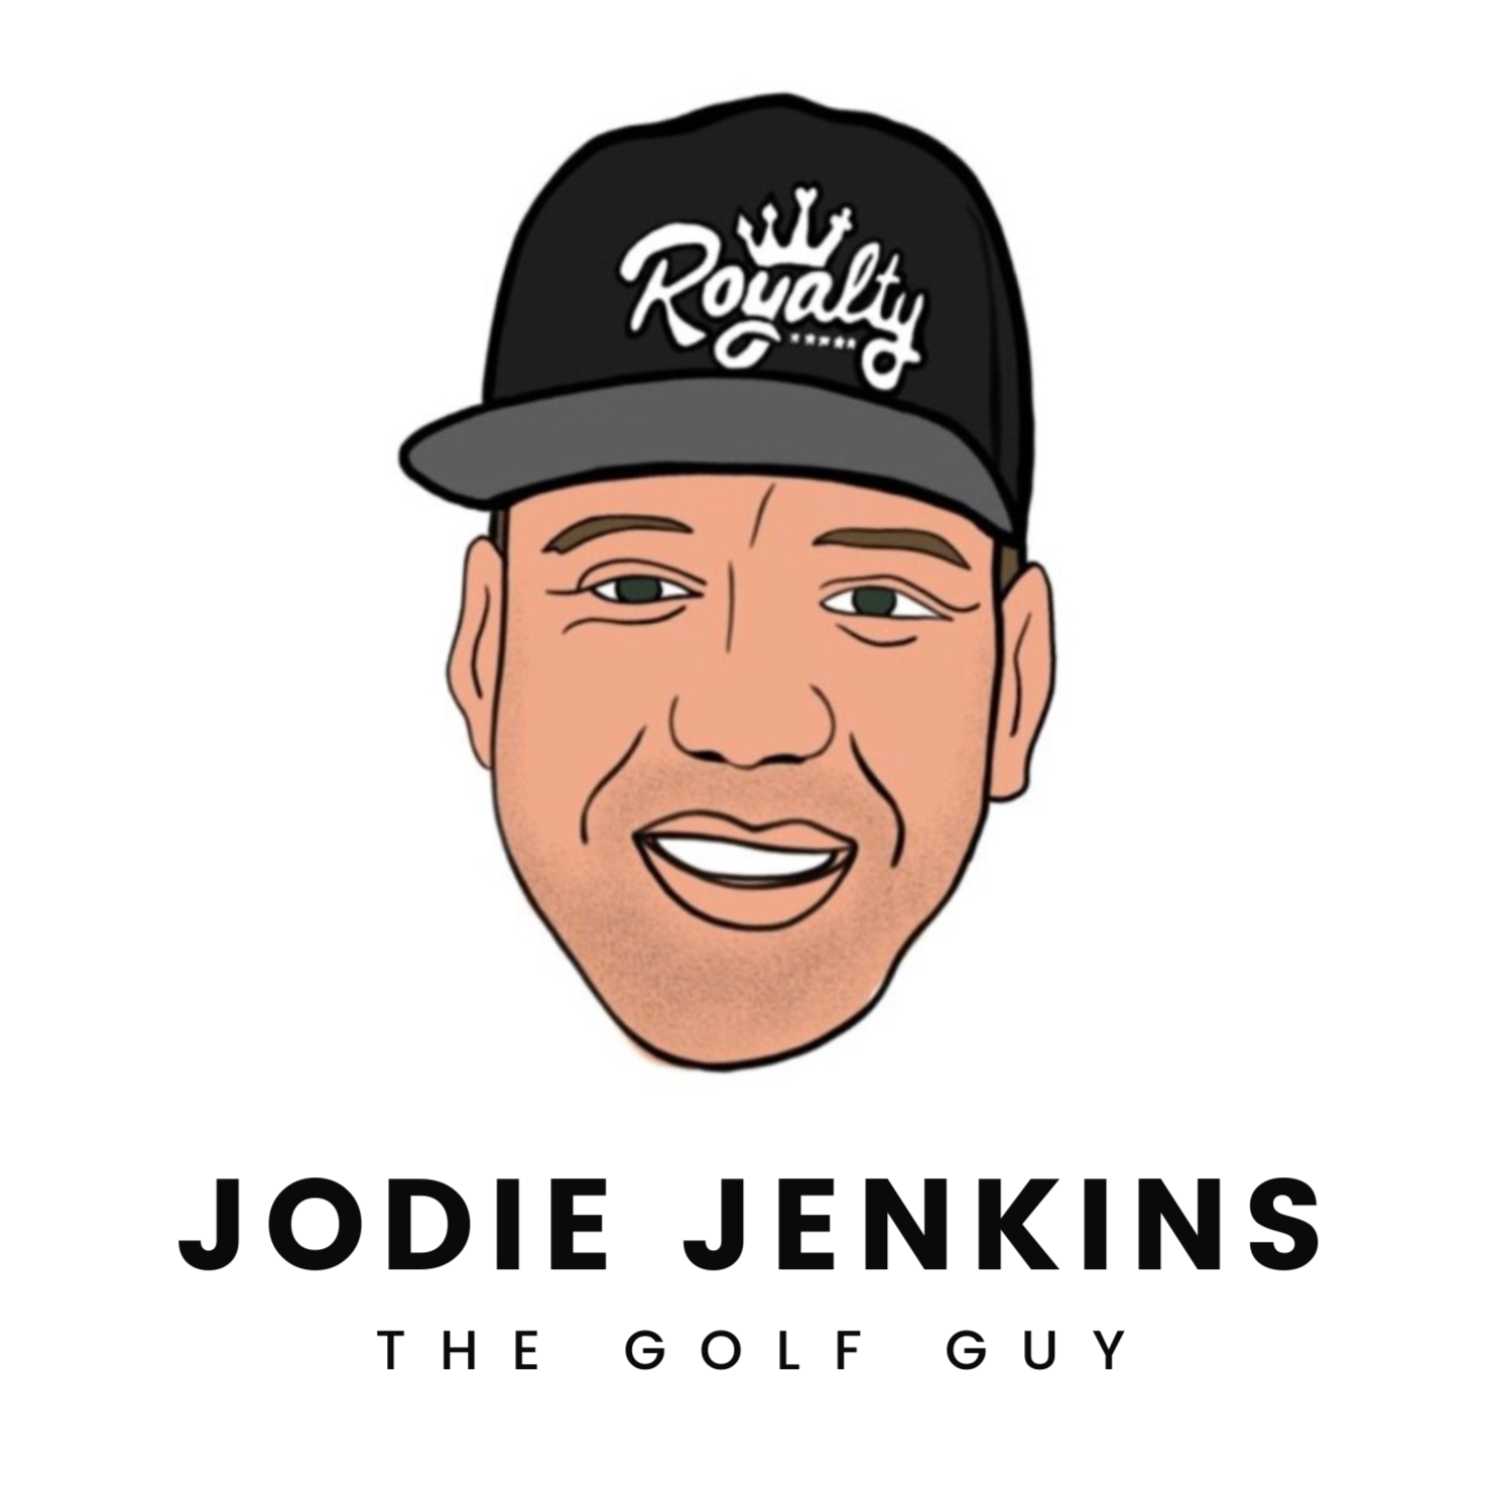 Jodie Jenkins the Golf Guy